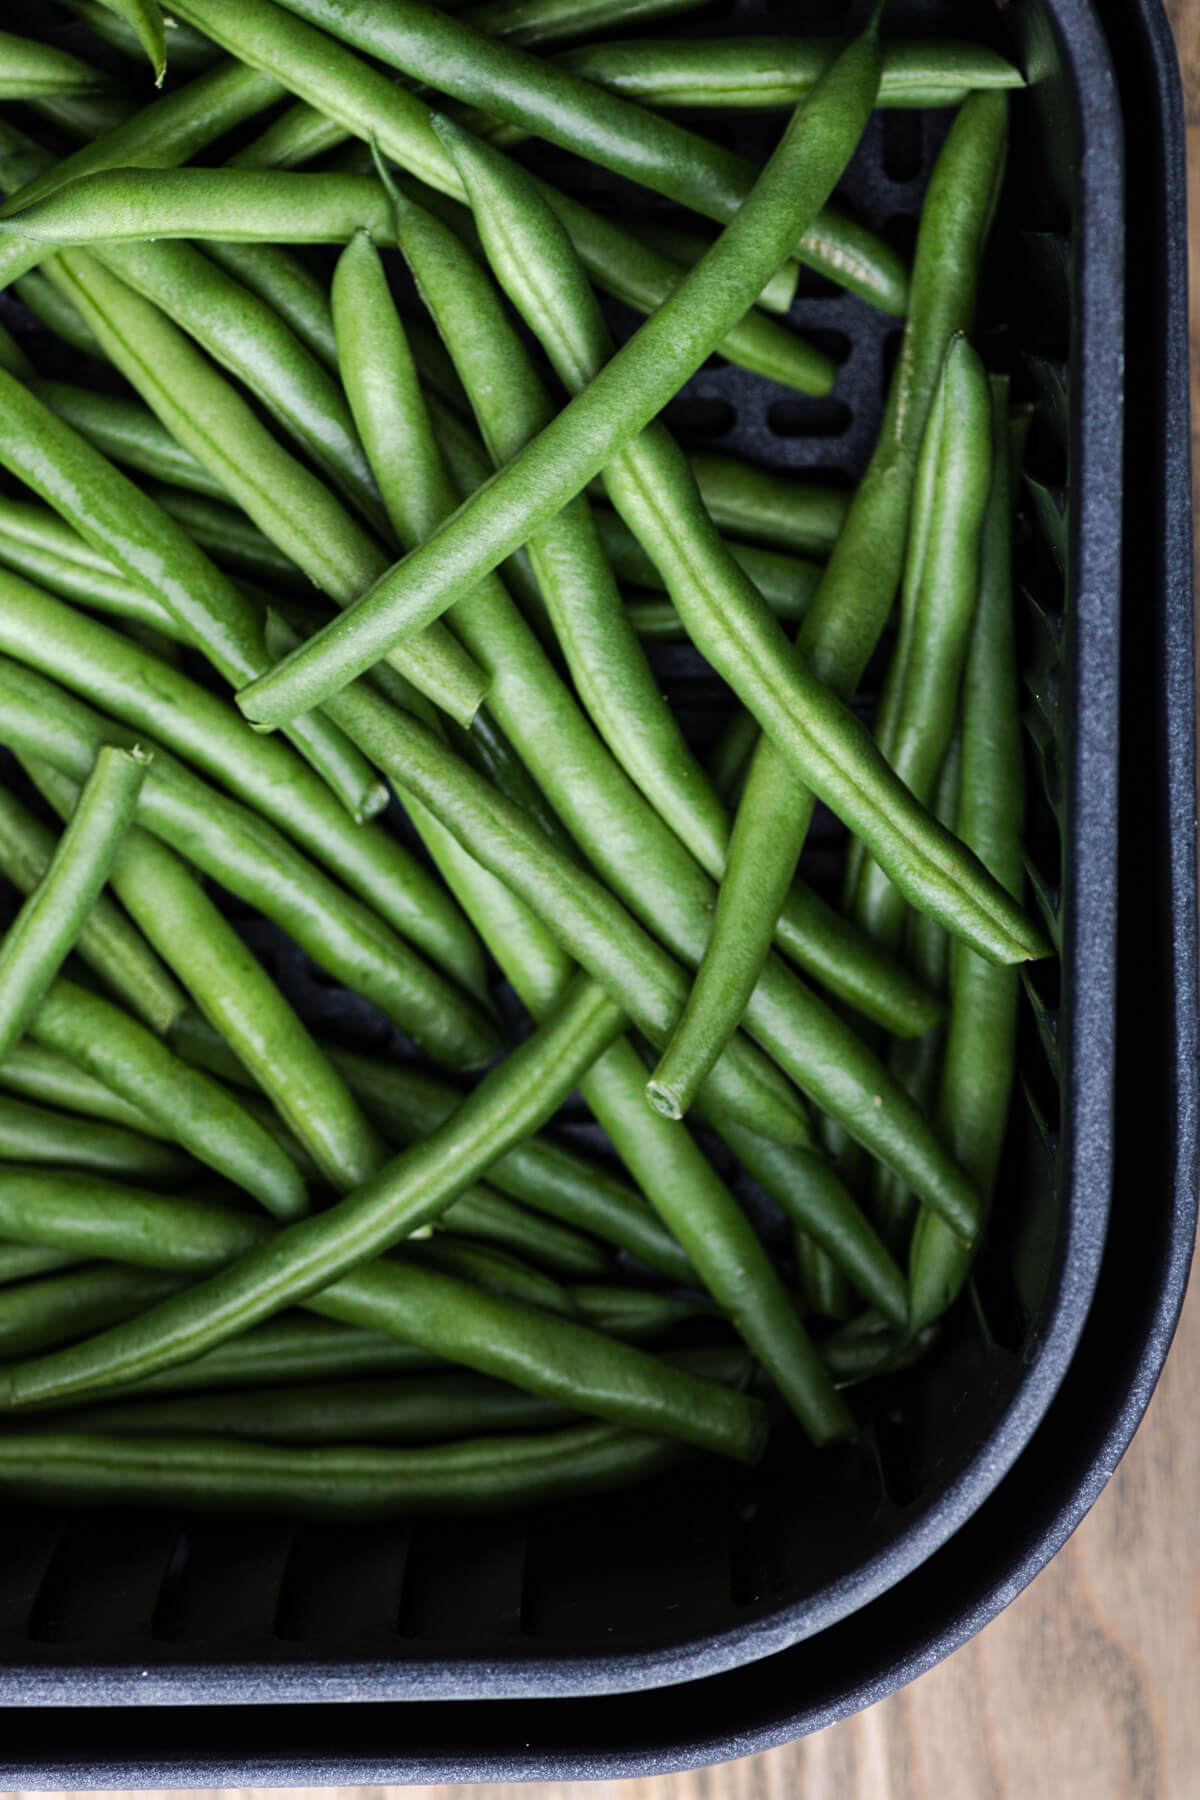 Vibrant raw green beans in an air fryer basket.